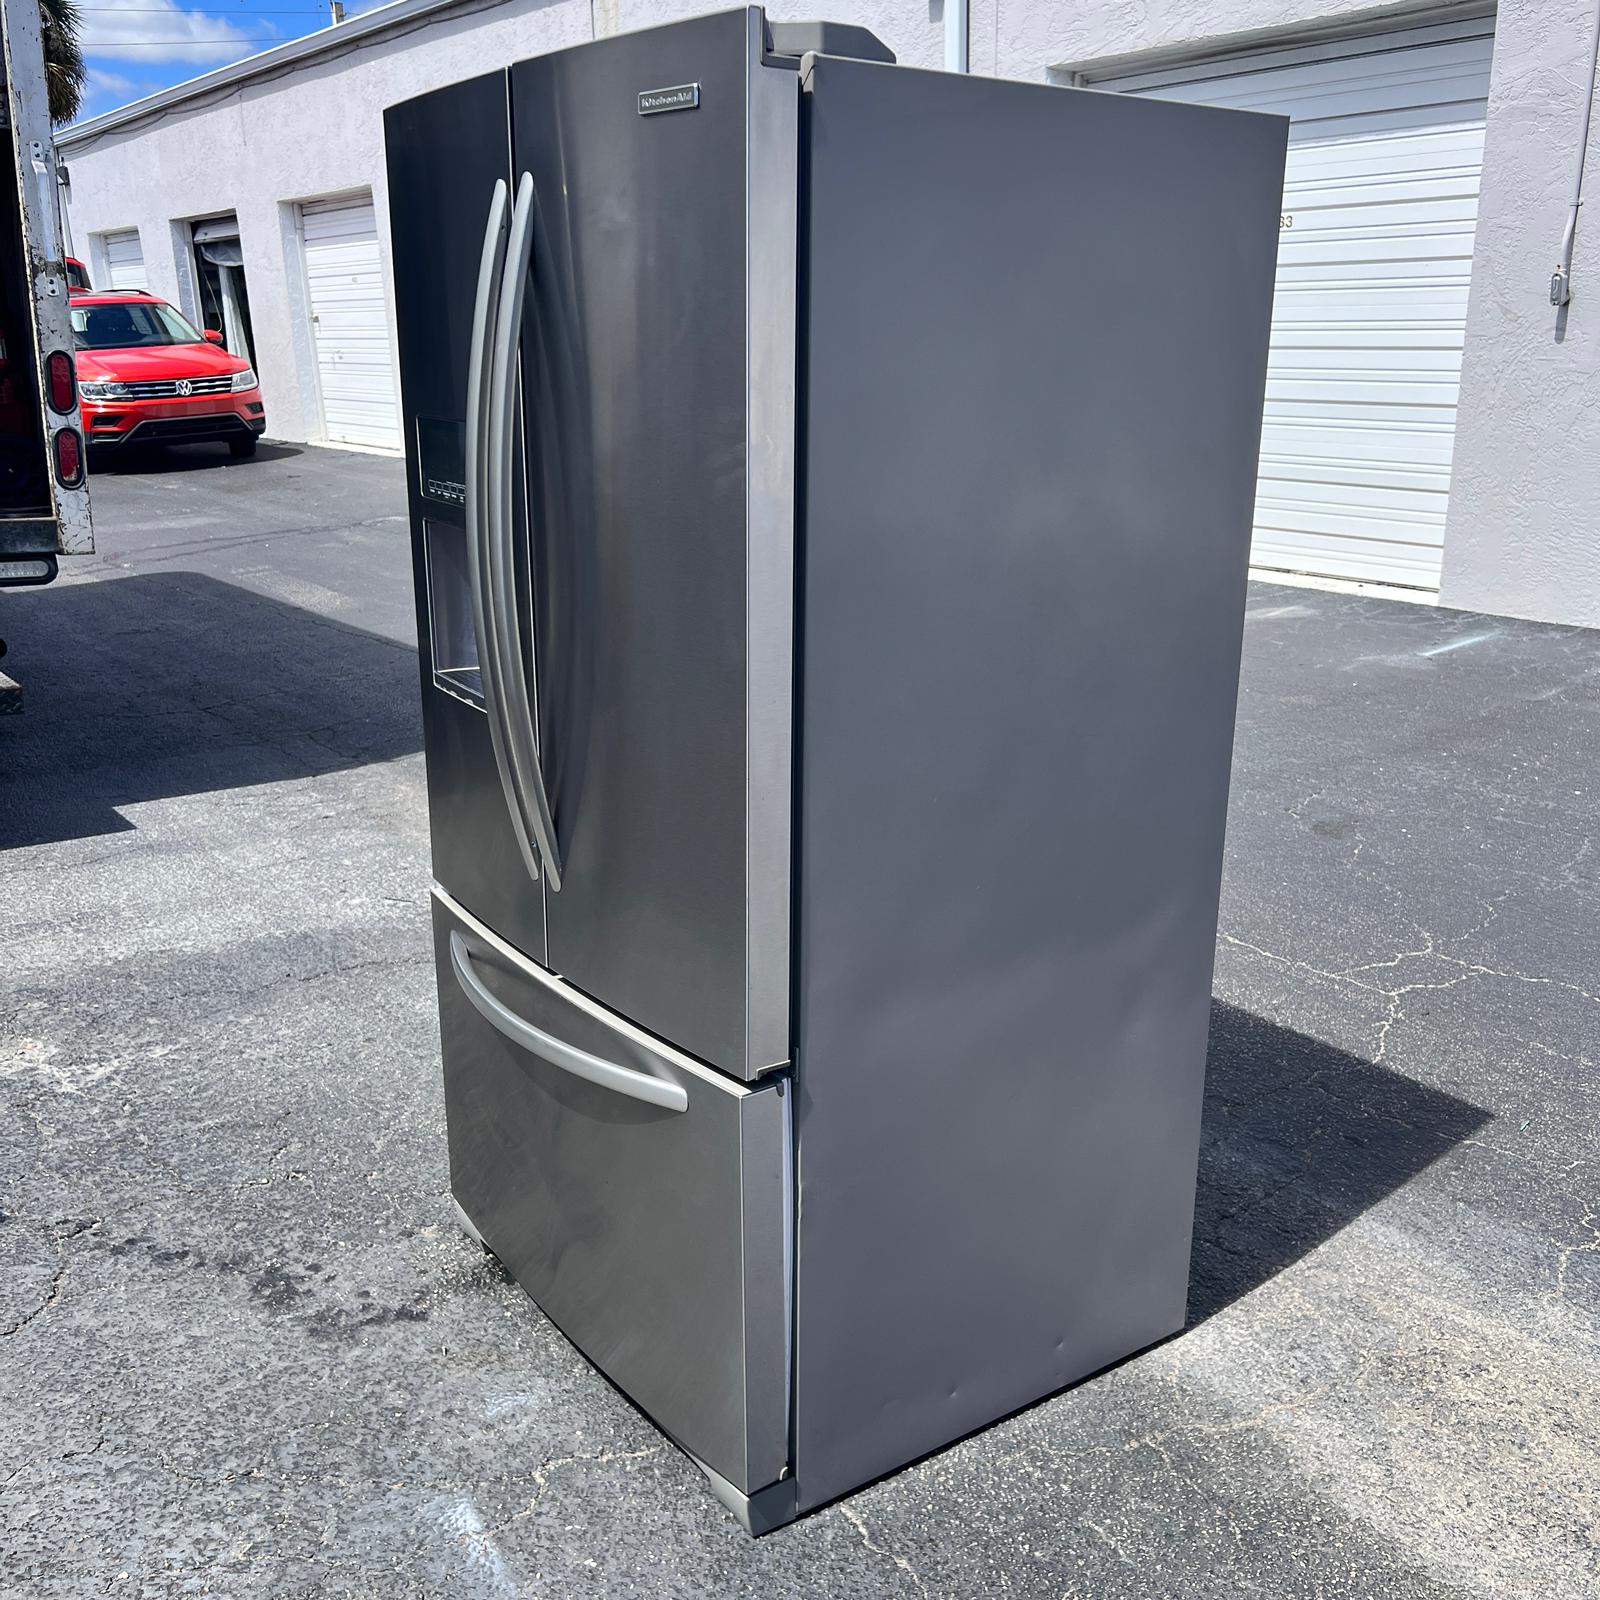 KitchenAid French Door Stainless Steel Refrigerator